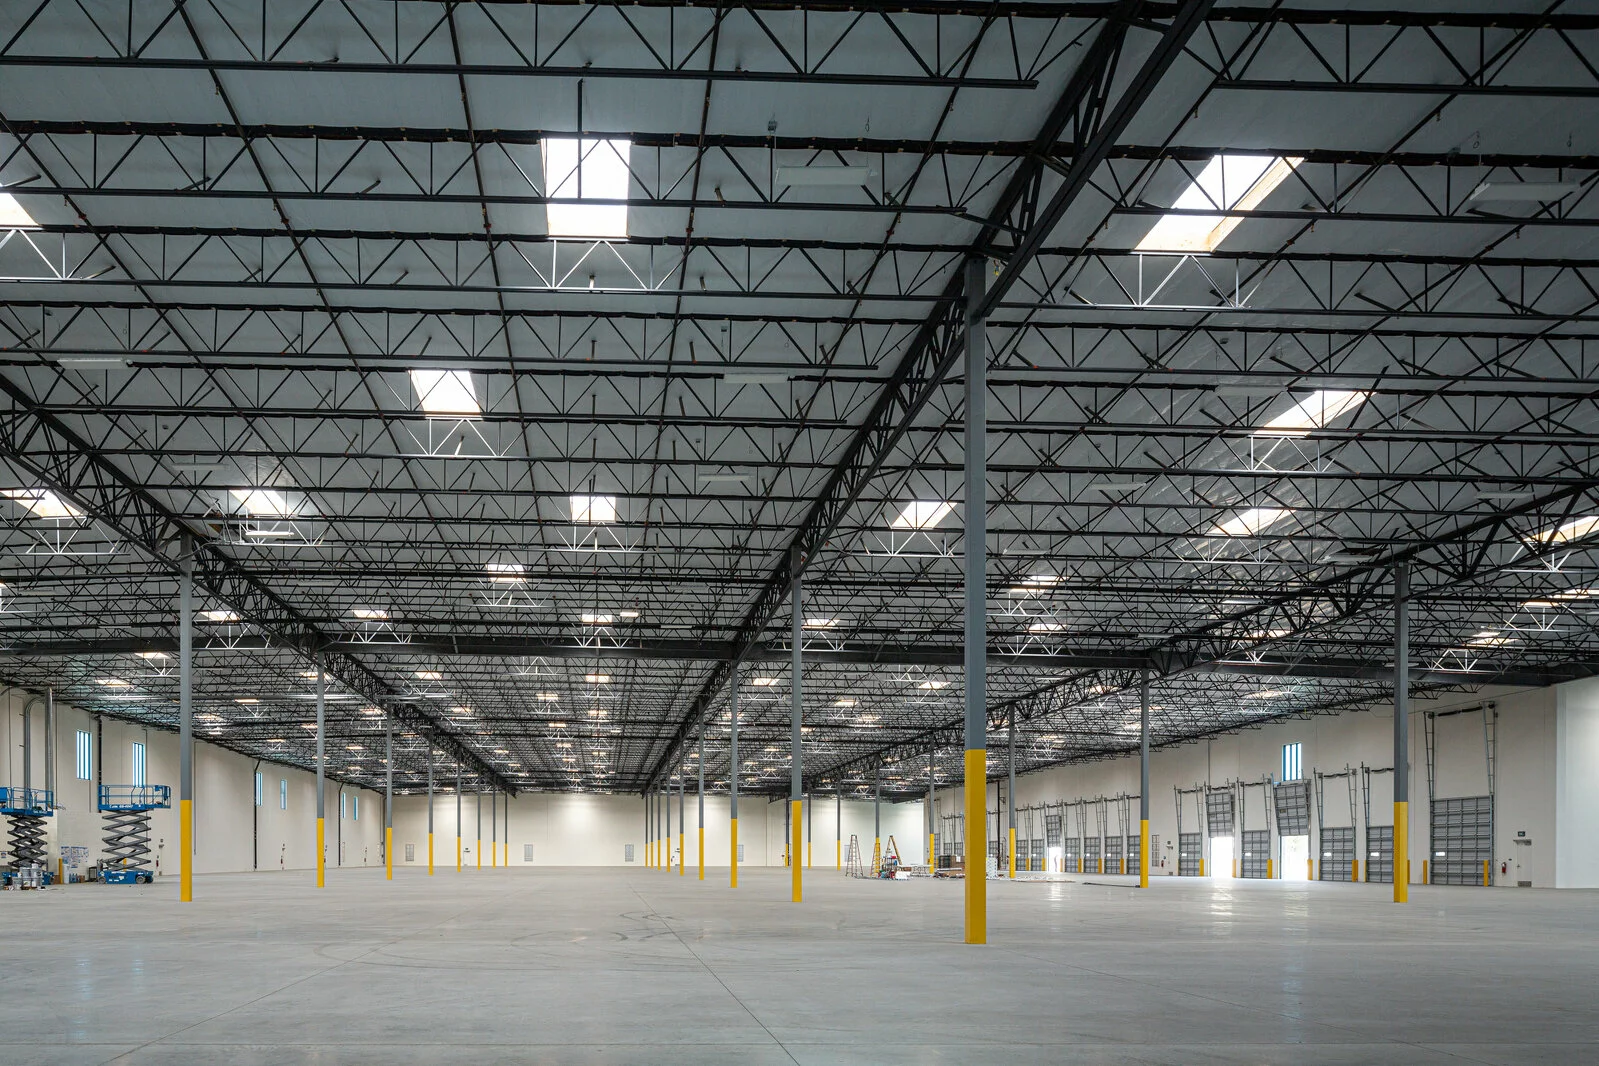 Almond Avenue, large interior facility, garage doors, gray and yellow beams, skylight windows.